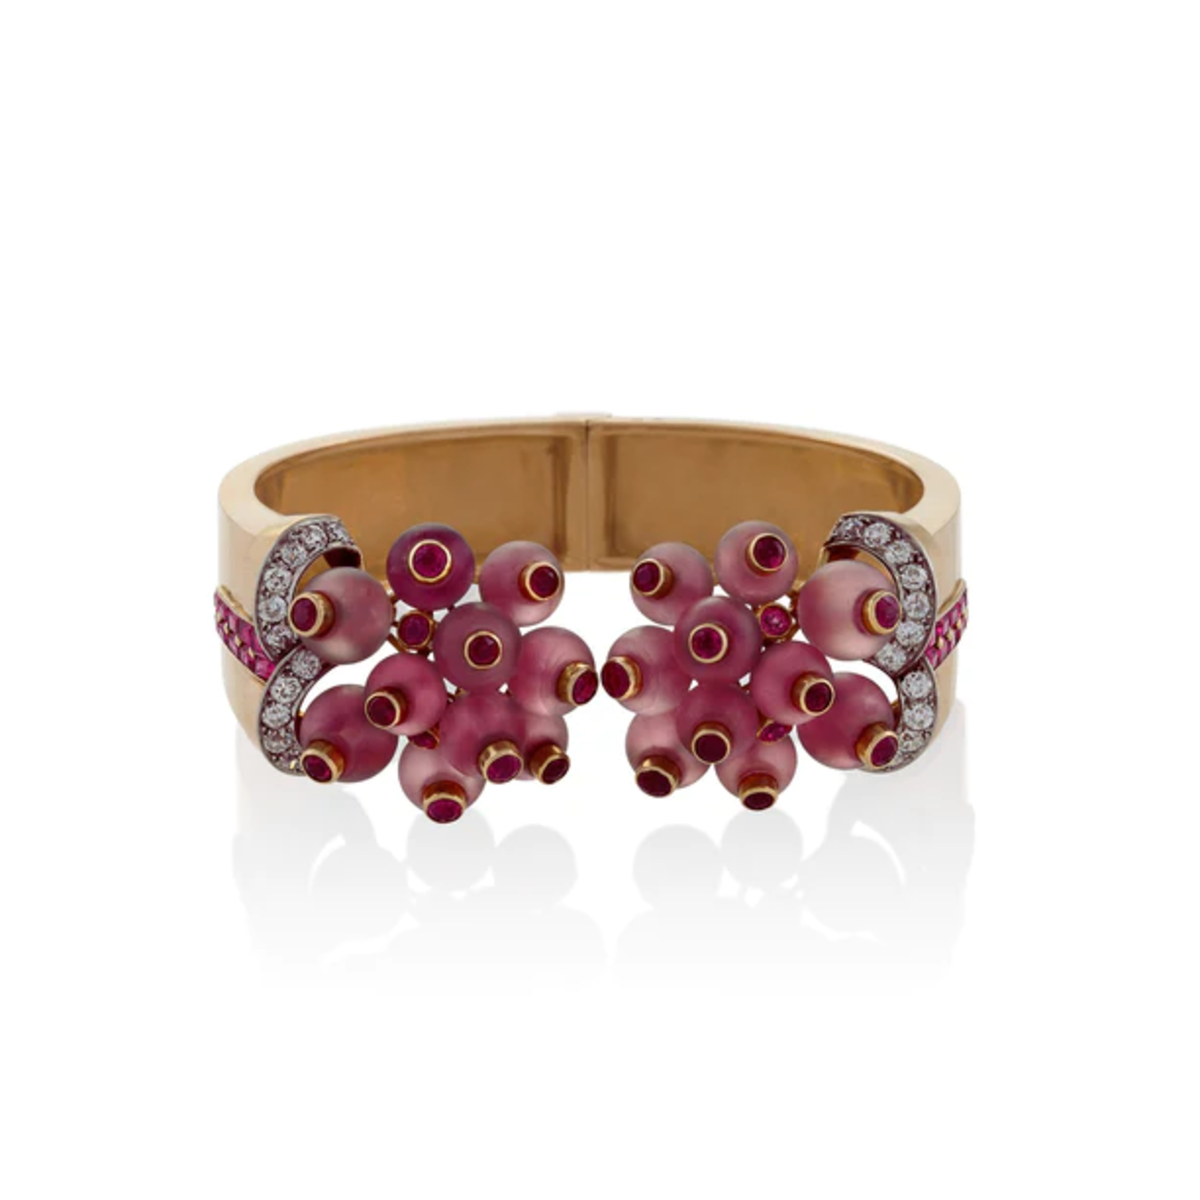 Verger Freres 1930s 18KT Rose Gold Ruby, Diamond & Rose Quartz Cuff Bracelet front view